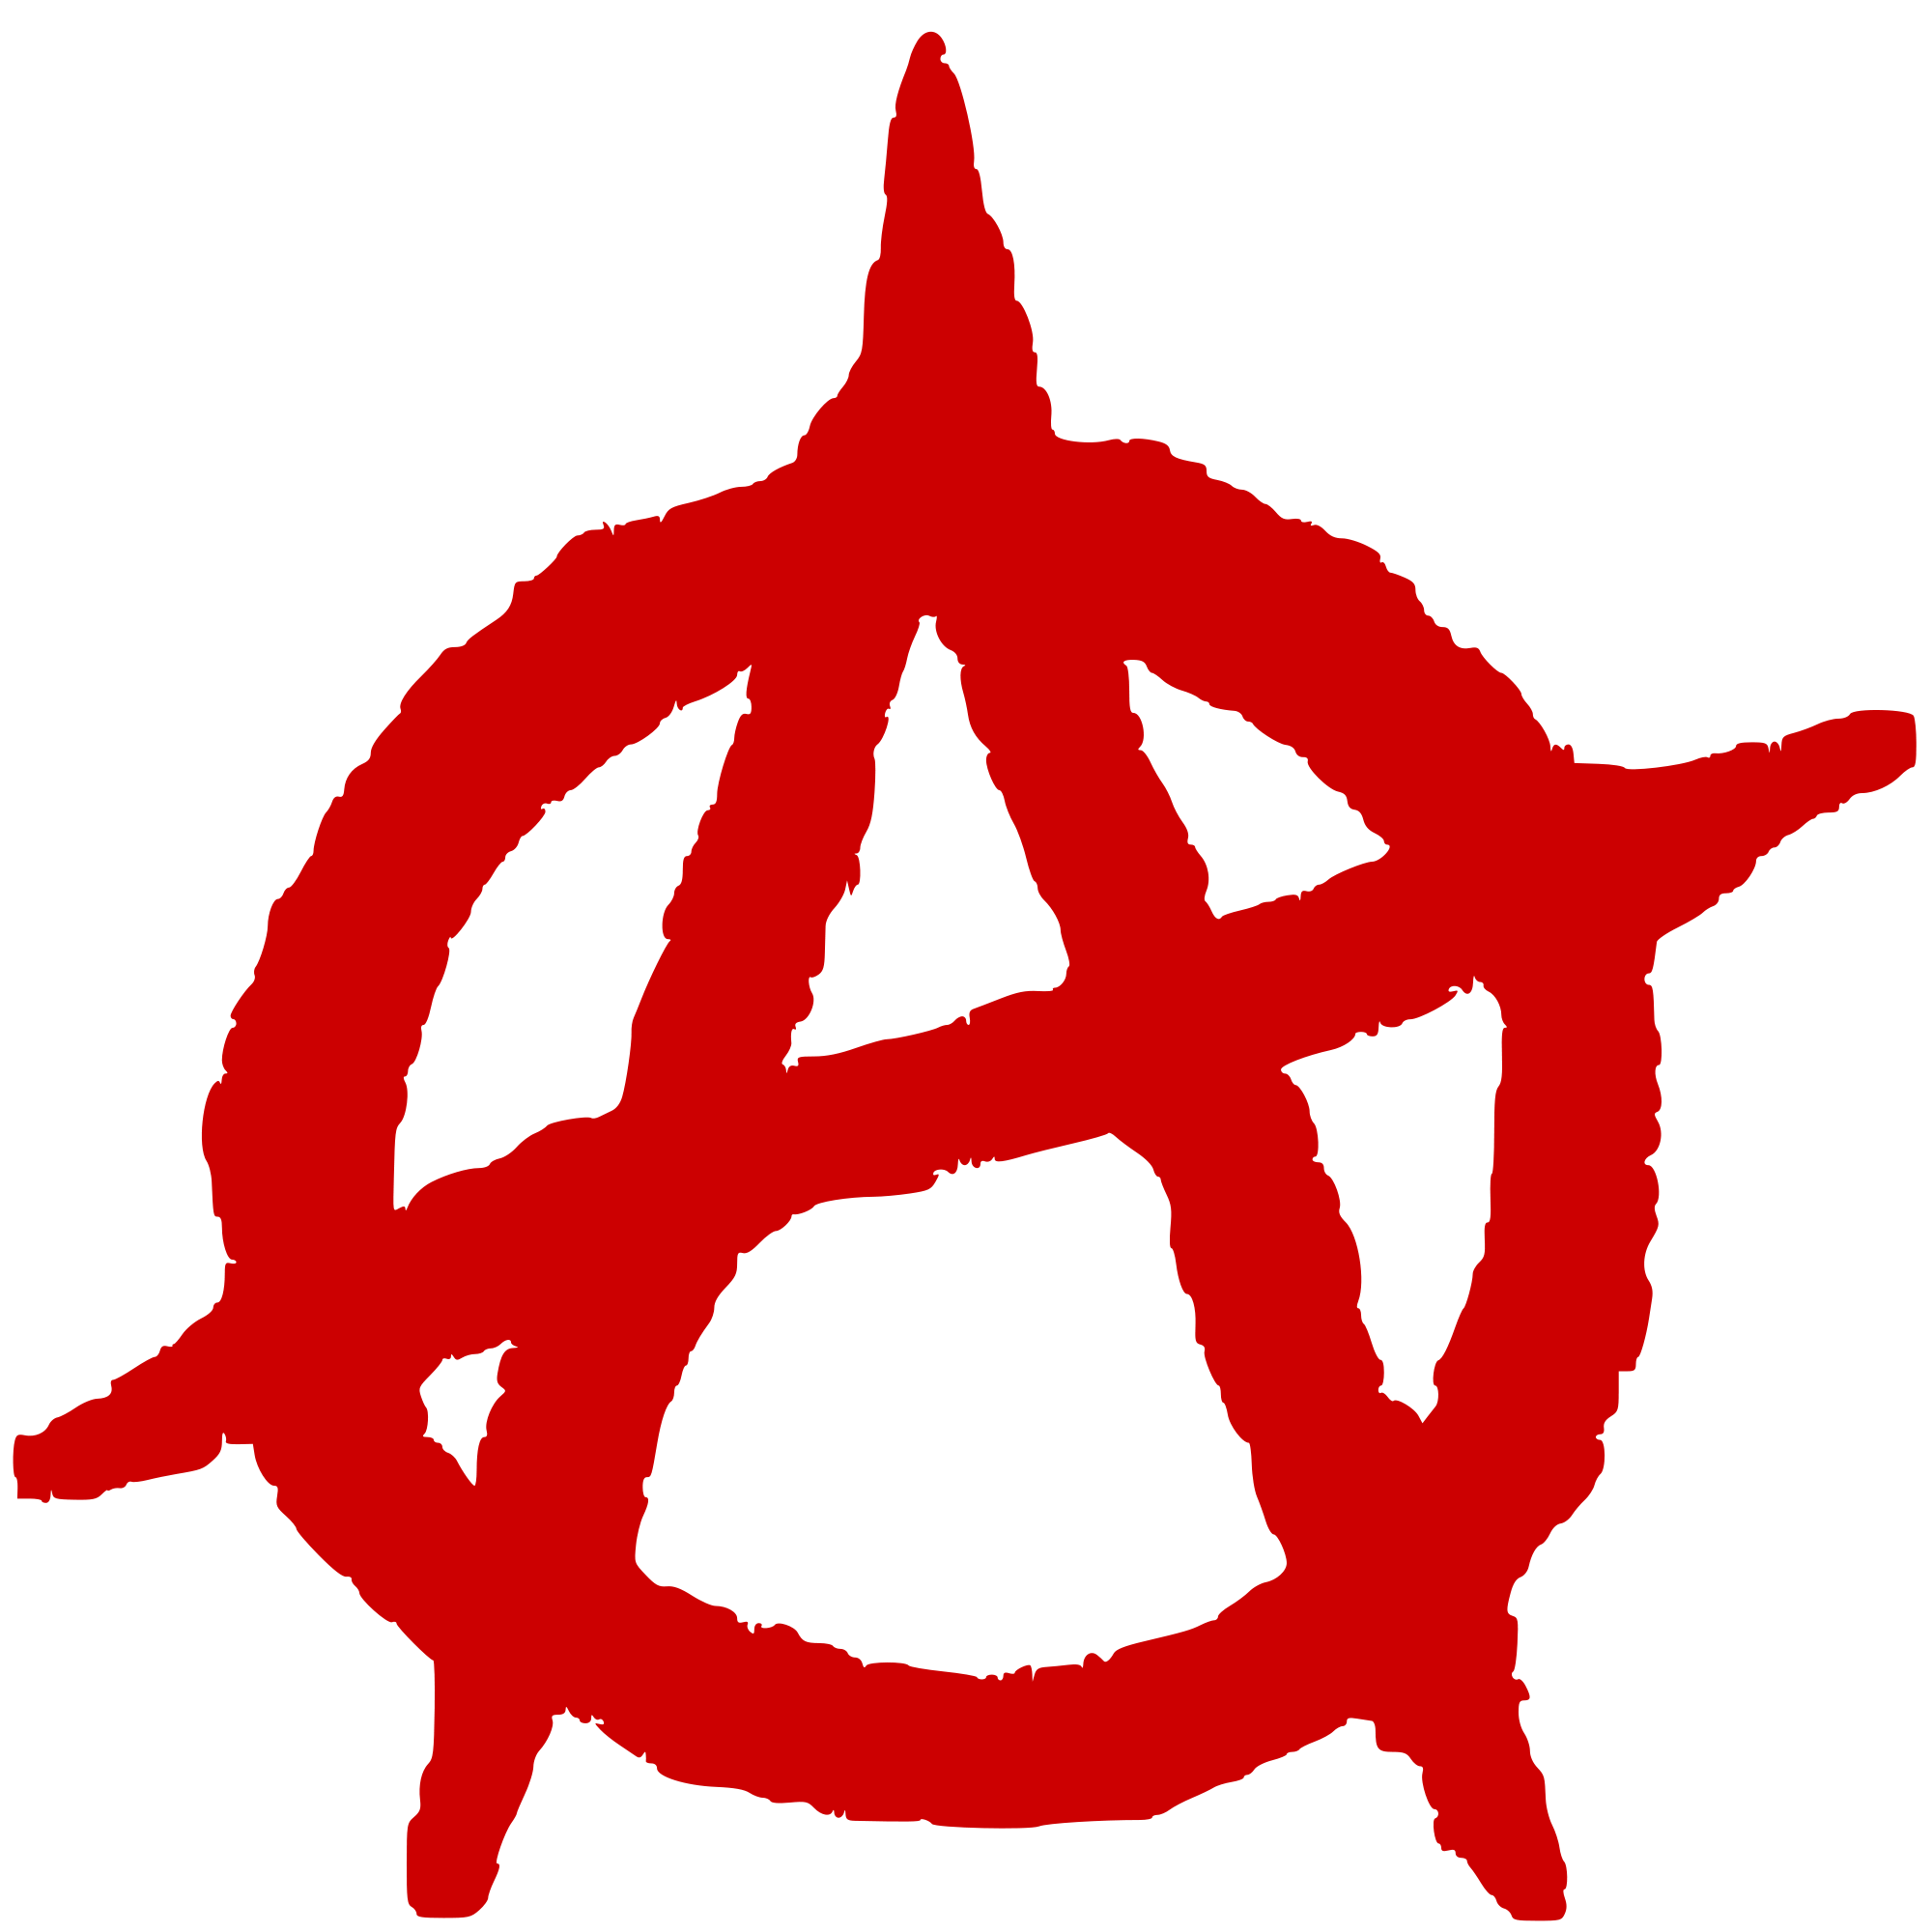 Anarchy PNG Transparent Image